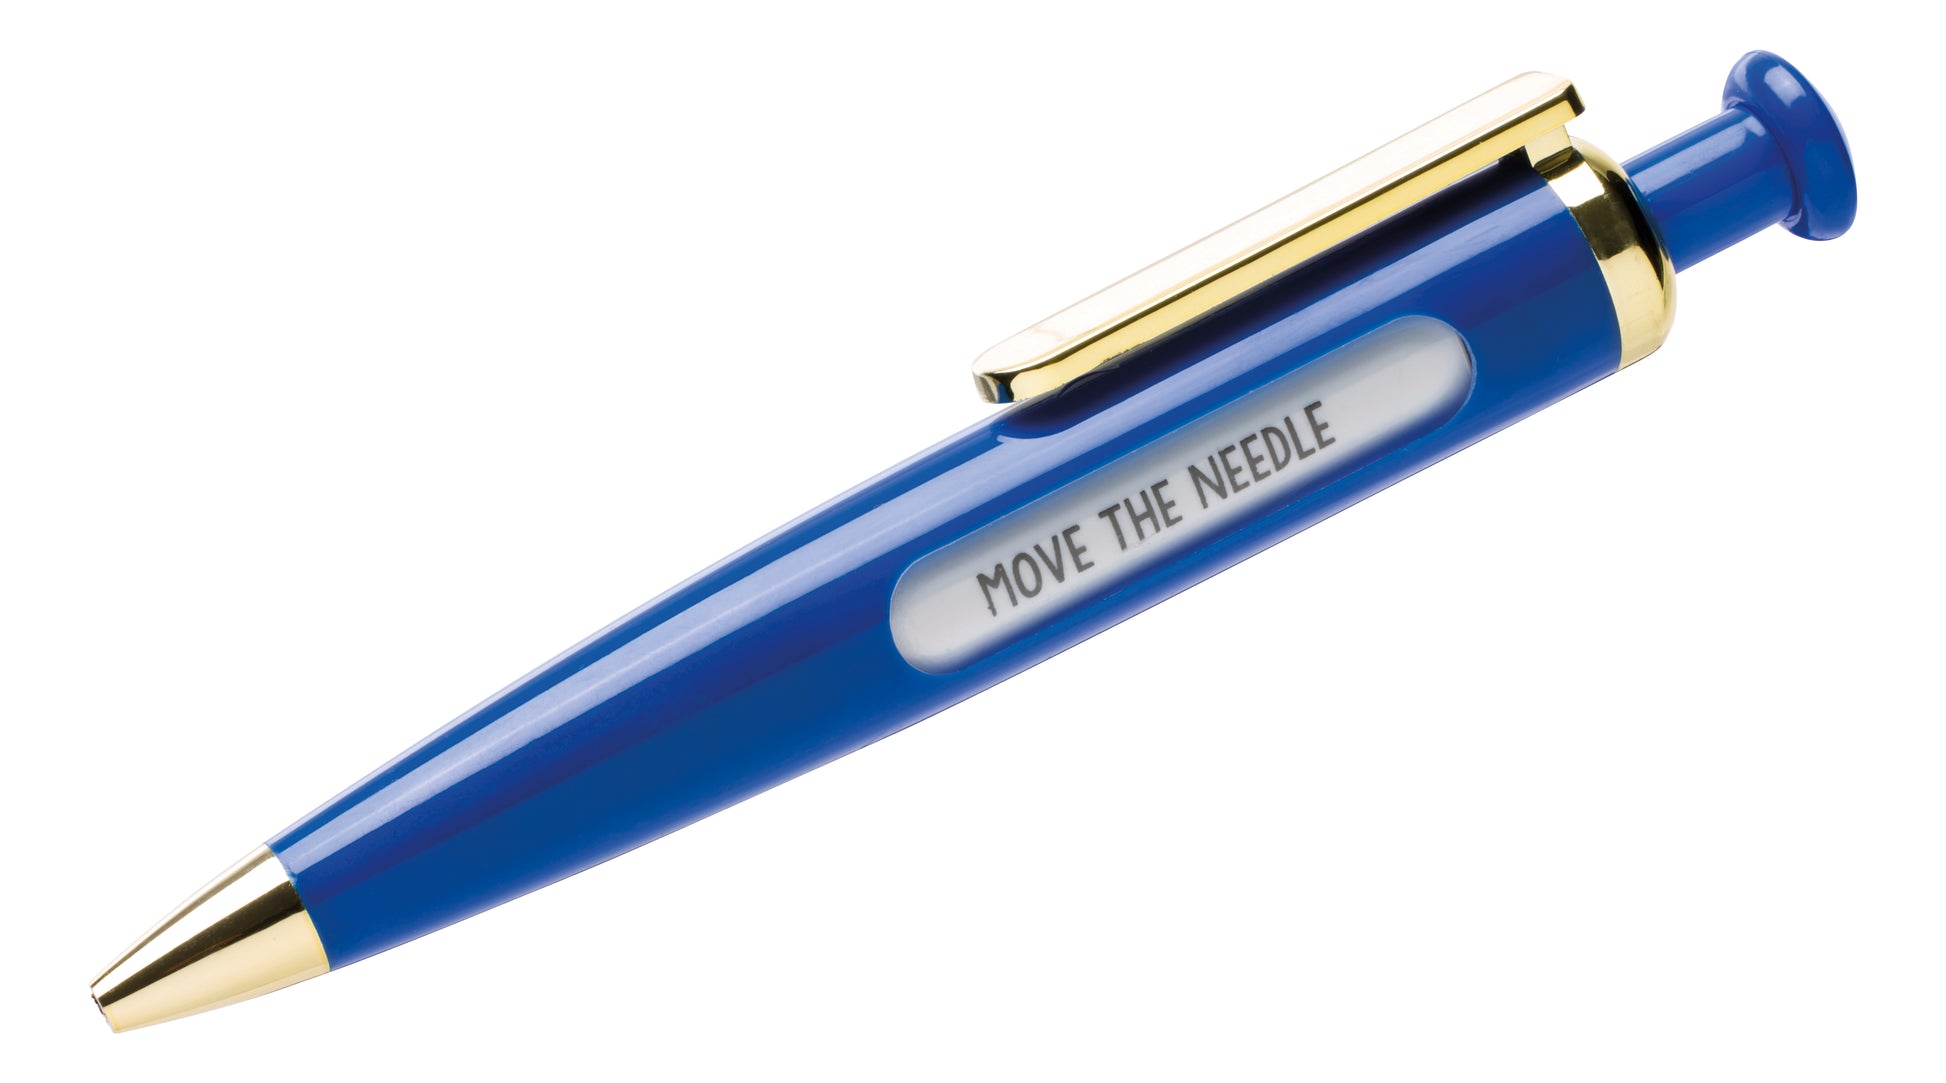 Toysmith Buzzword Pen